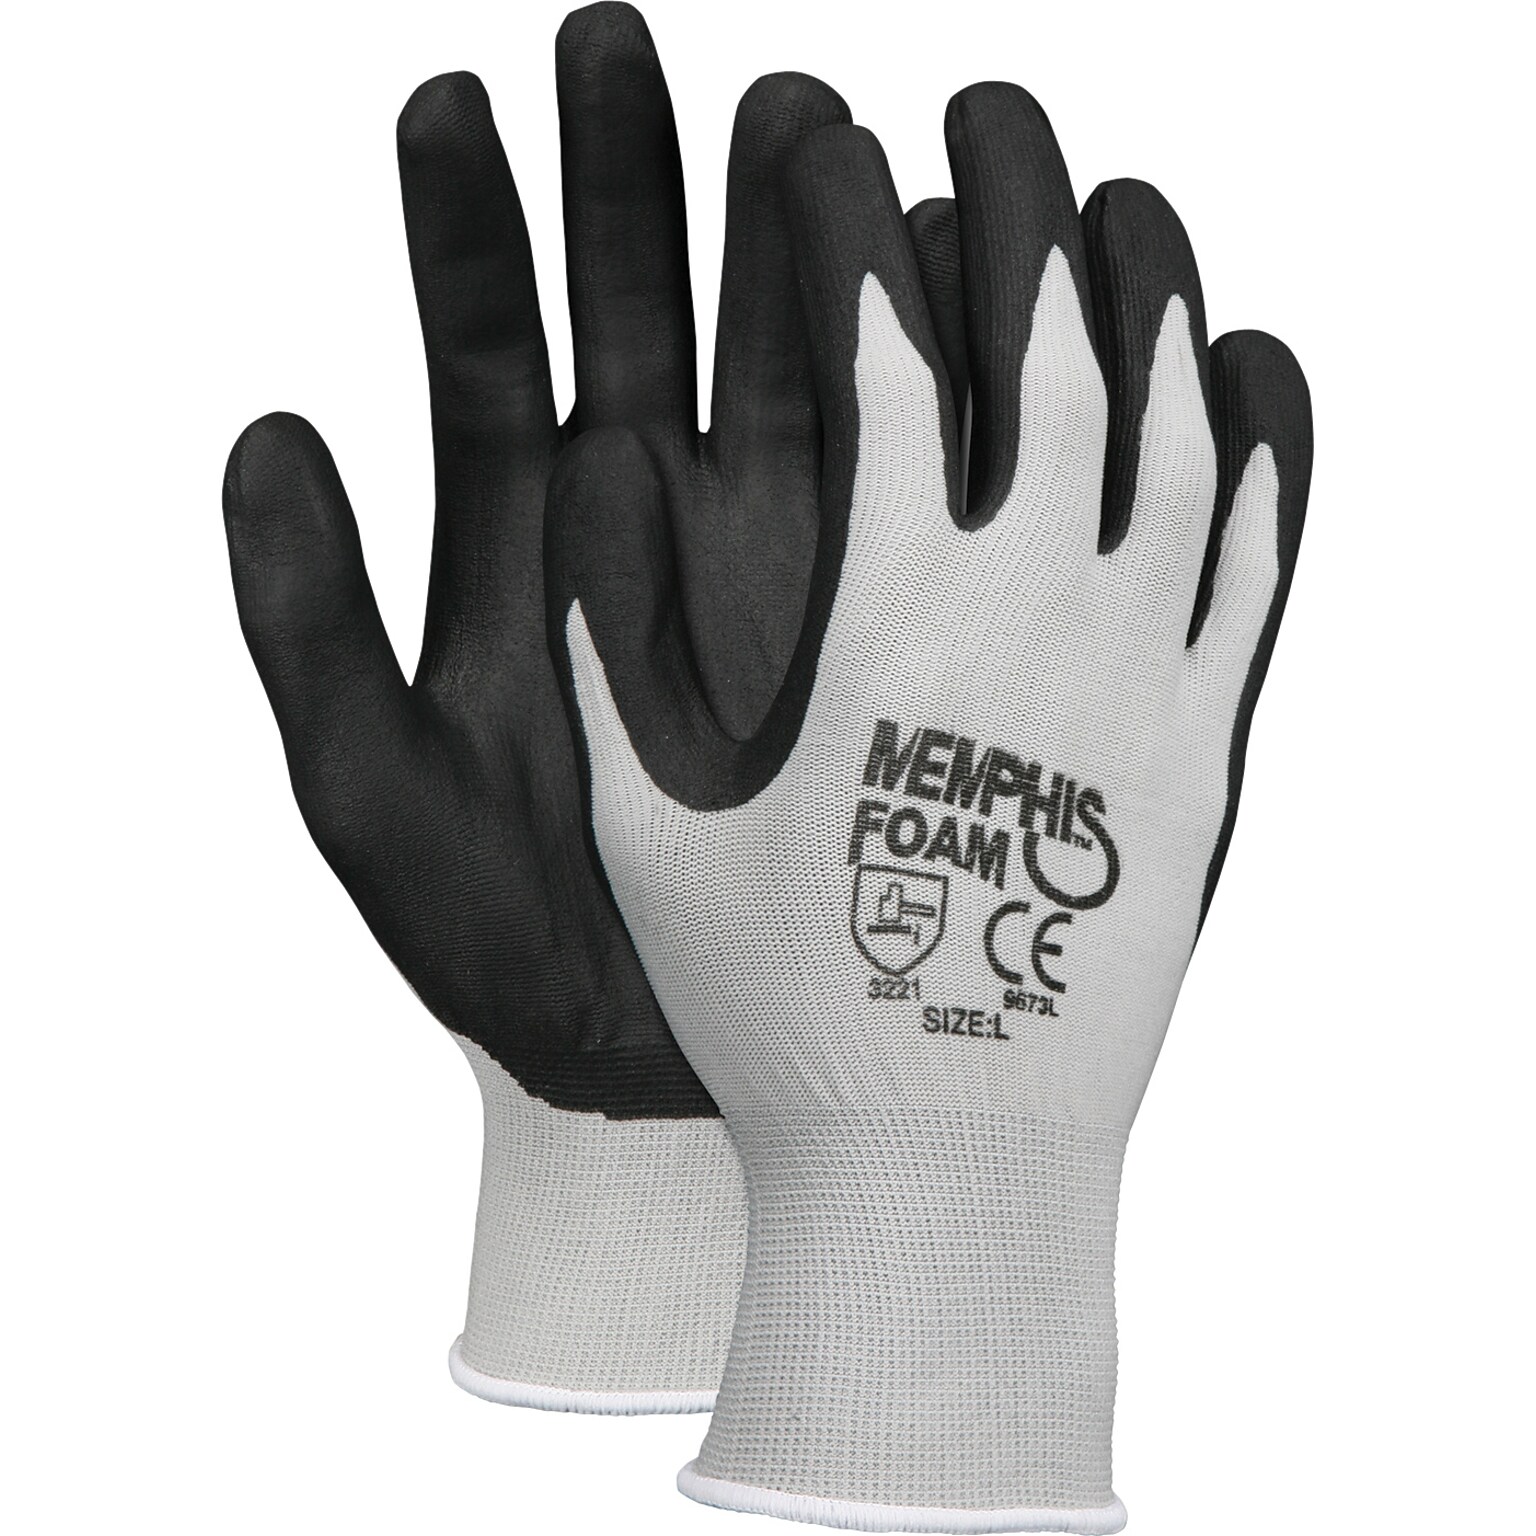 Memphis™ Economy Foam Nitrile Gloves, Small, Gray/Black, 12 Pairs